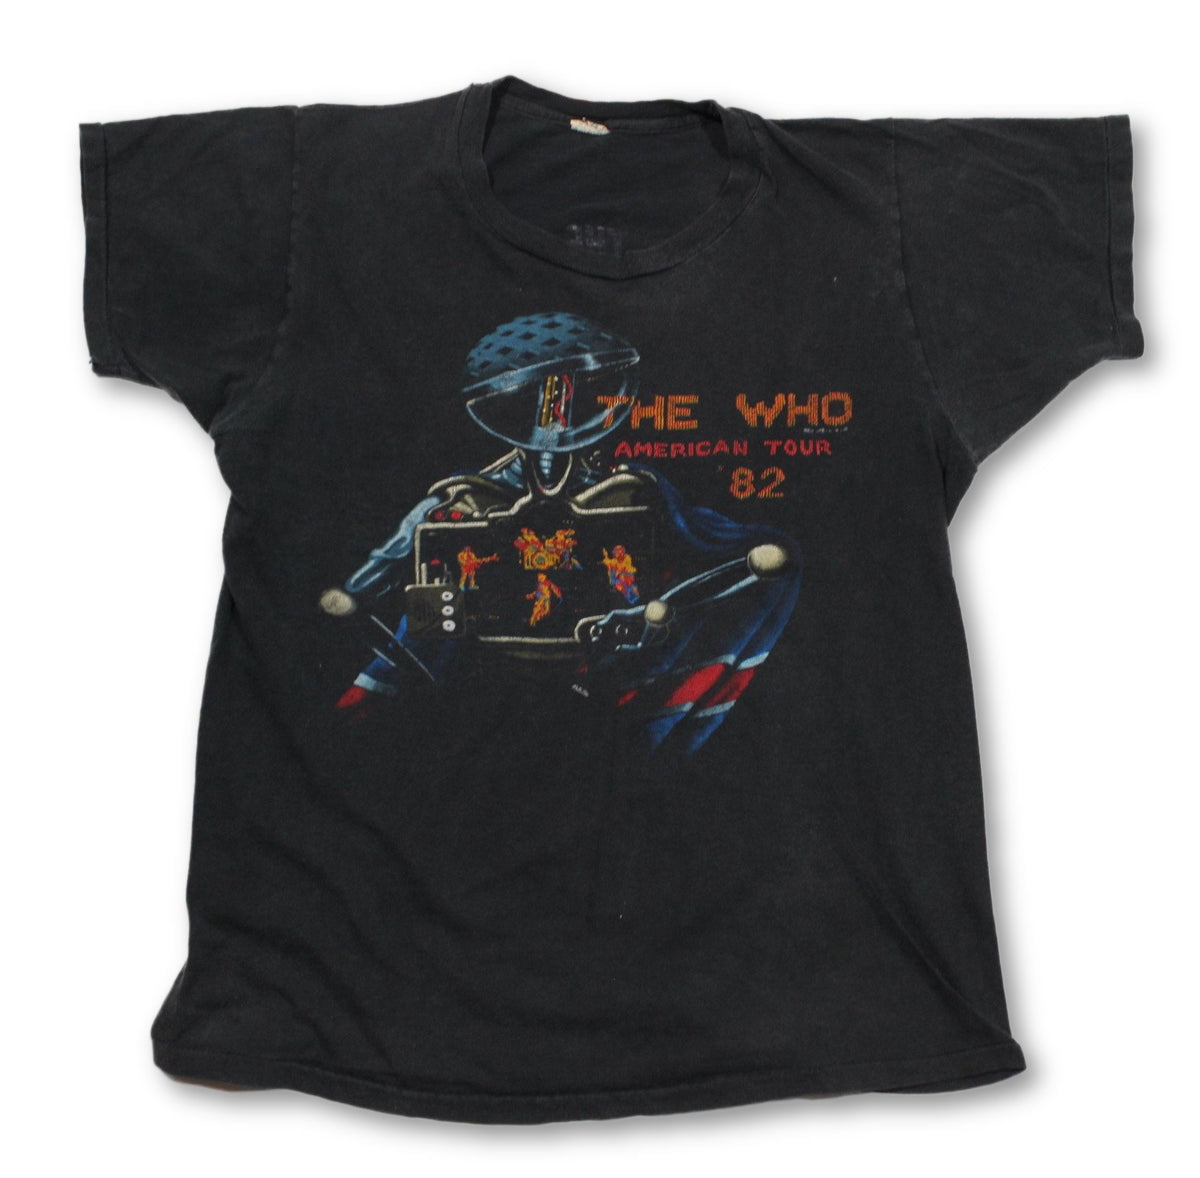 Vintage The Who &quot;American Tour 82&quot; T-Shirt - jointcustodydc